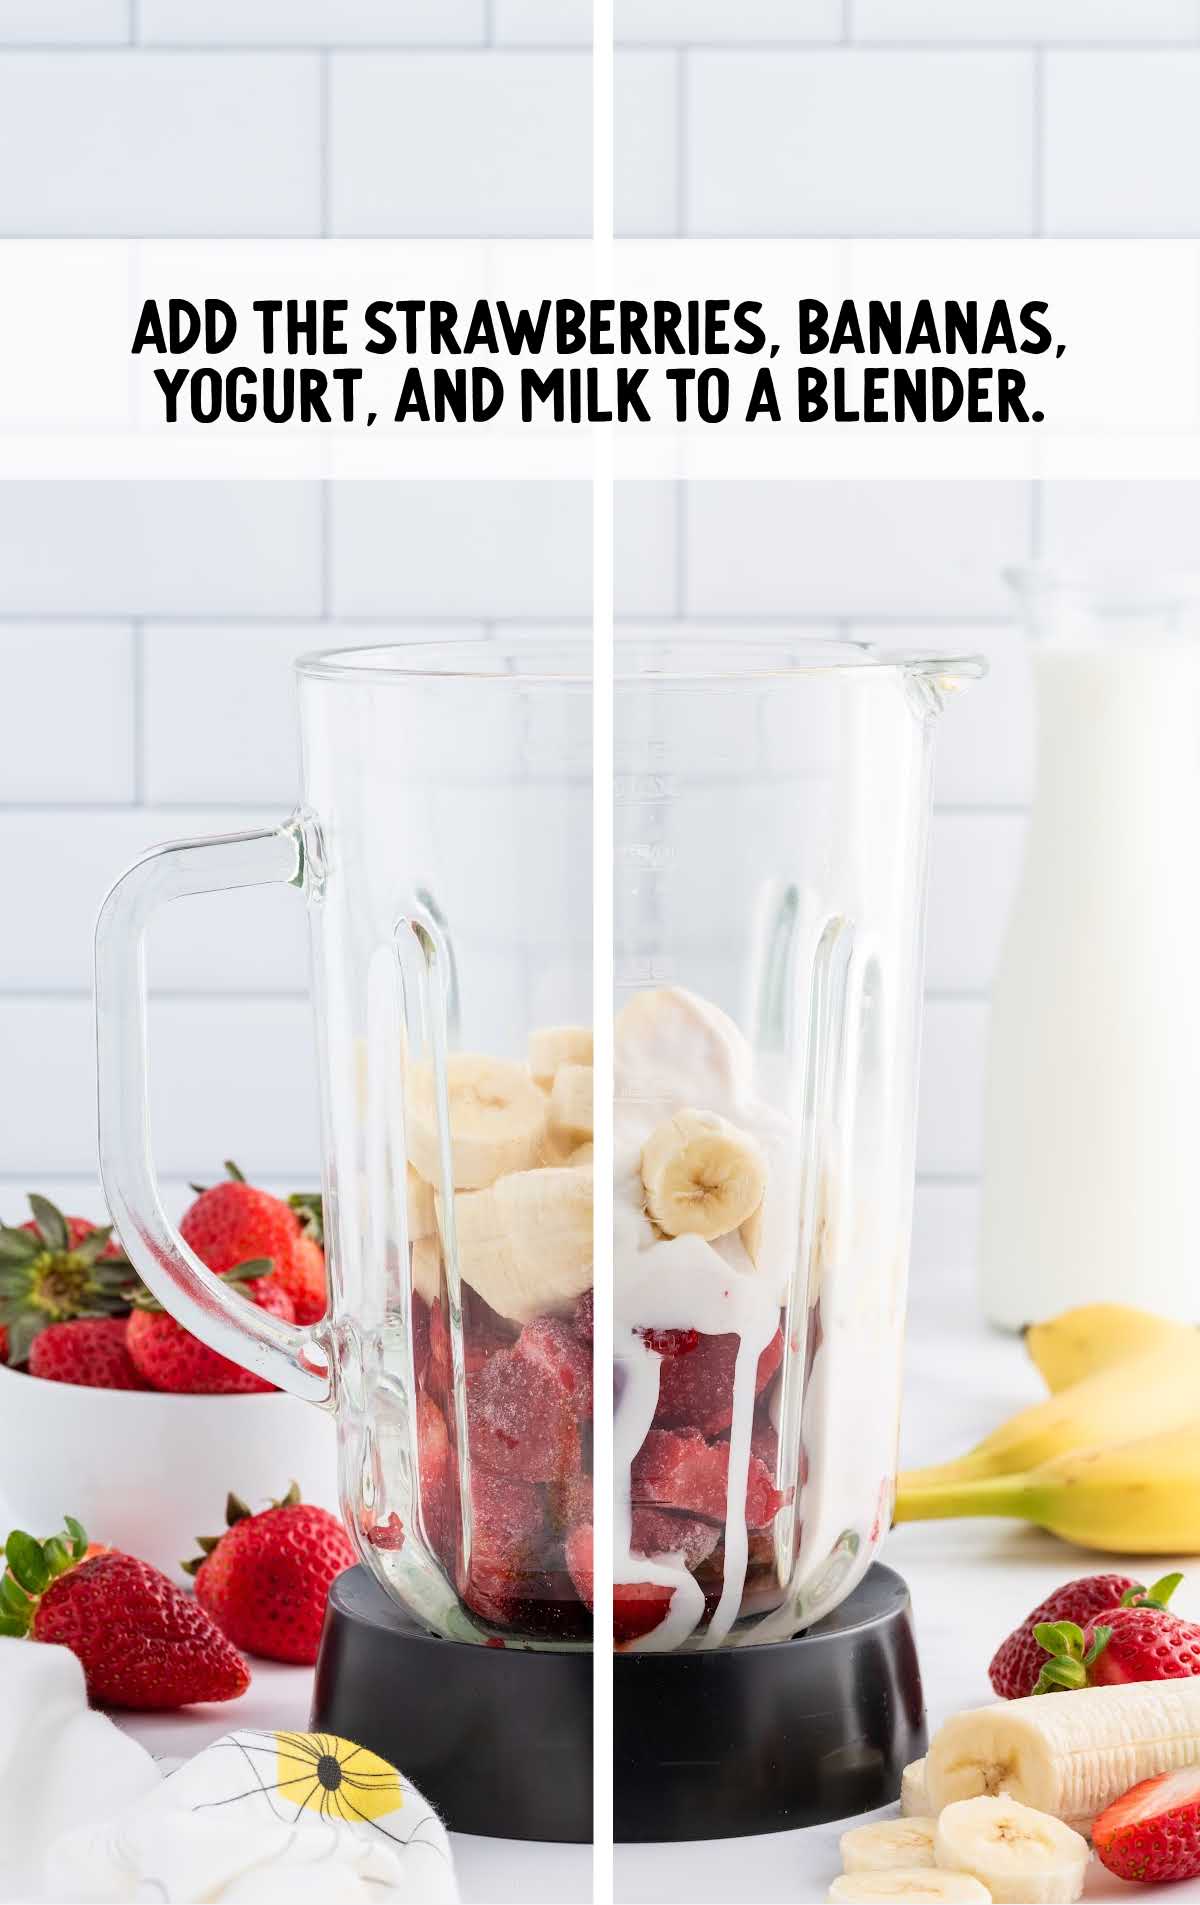 strawberries, bananas, yogurt, and milk blended in a blender